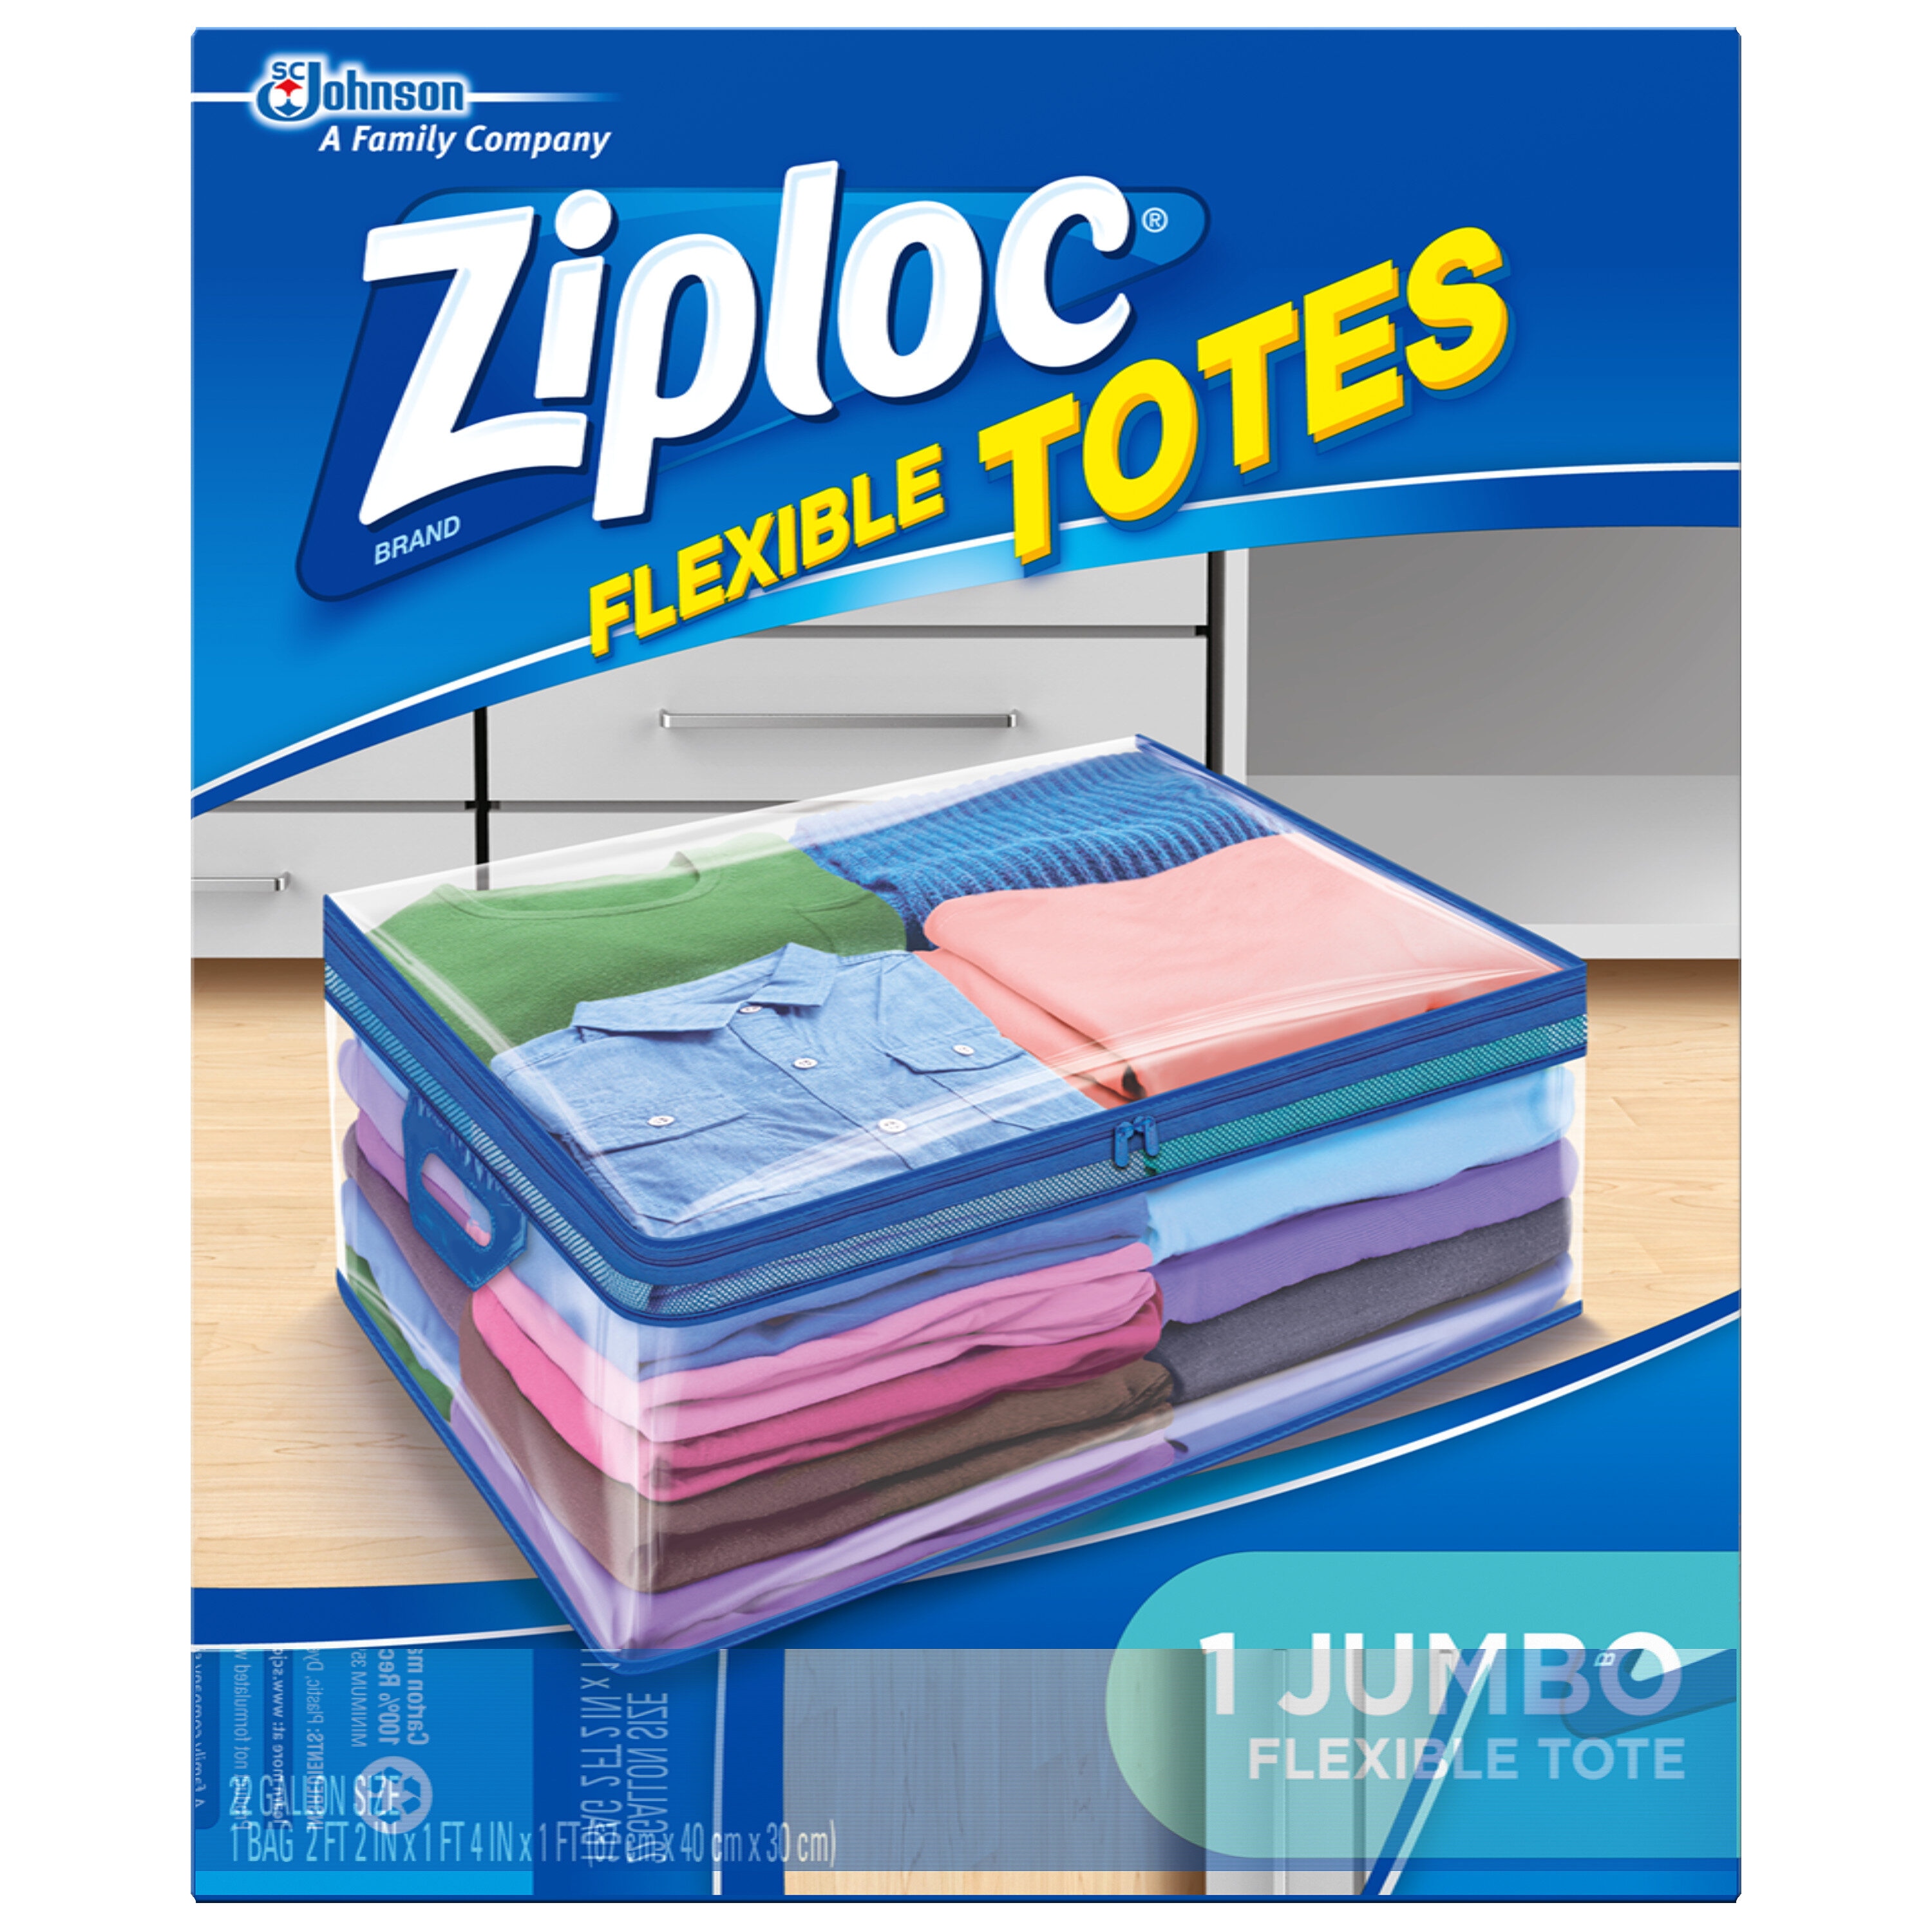 Review: Ziploc Brand Flexible Totes